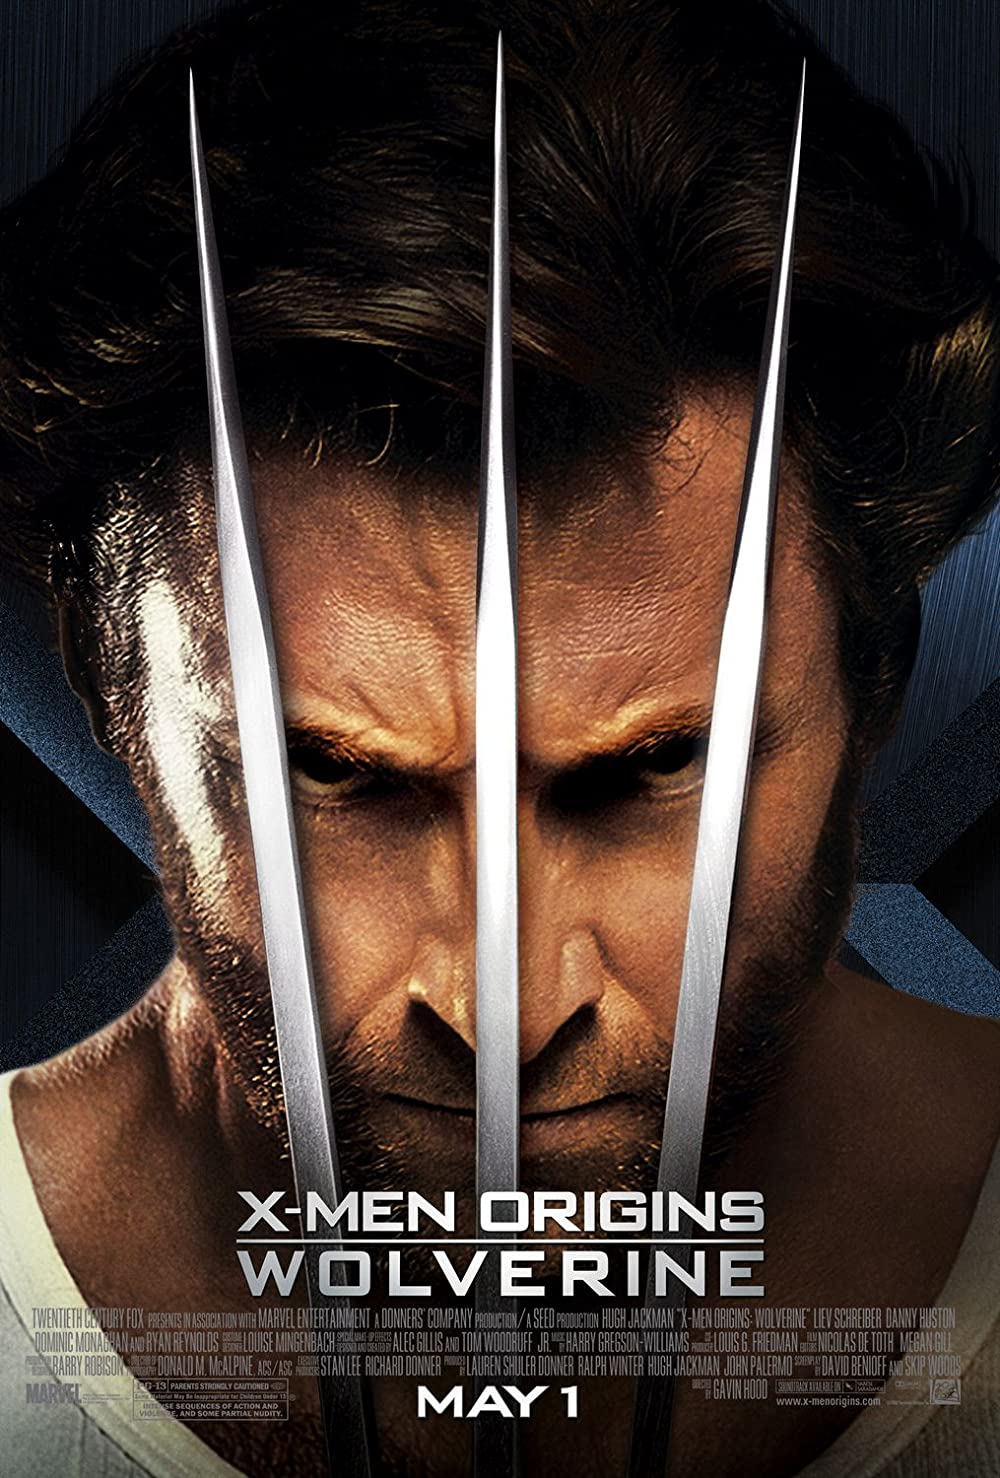 FULL MOVIE: X-Men Origins: Wolverine (2009) [Action]